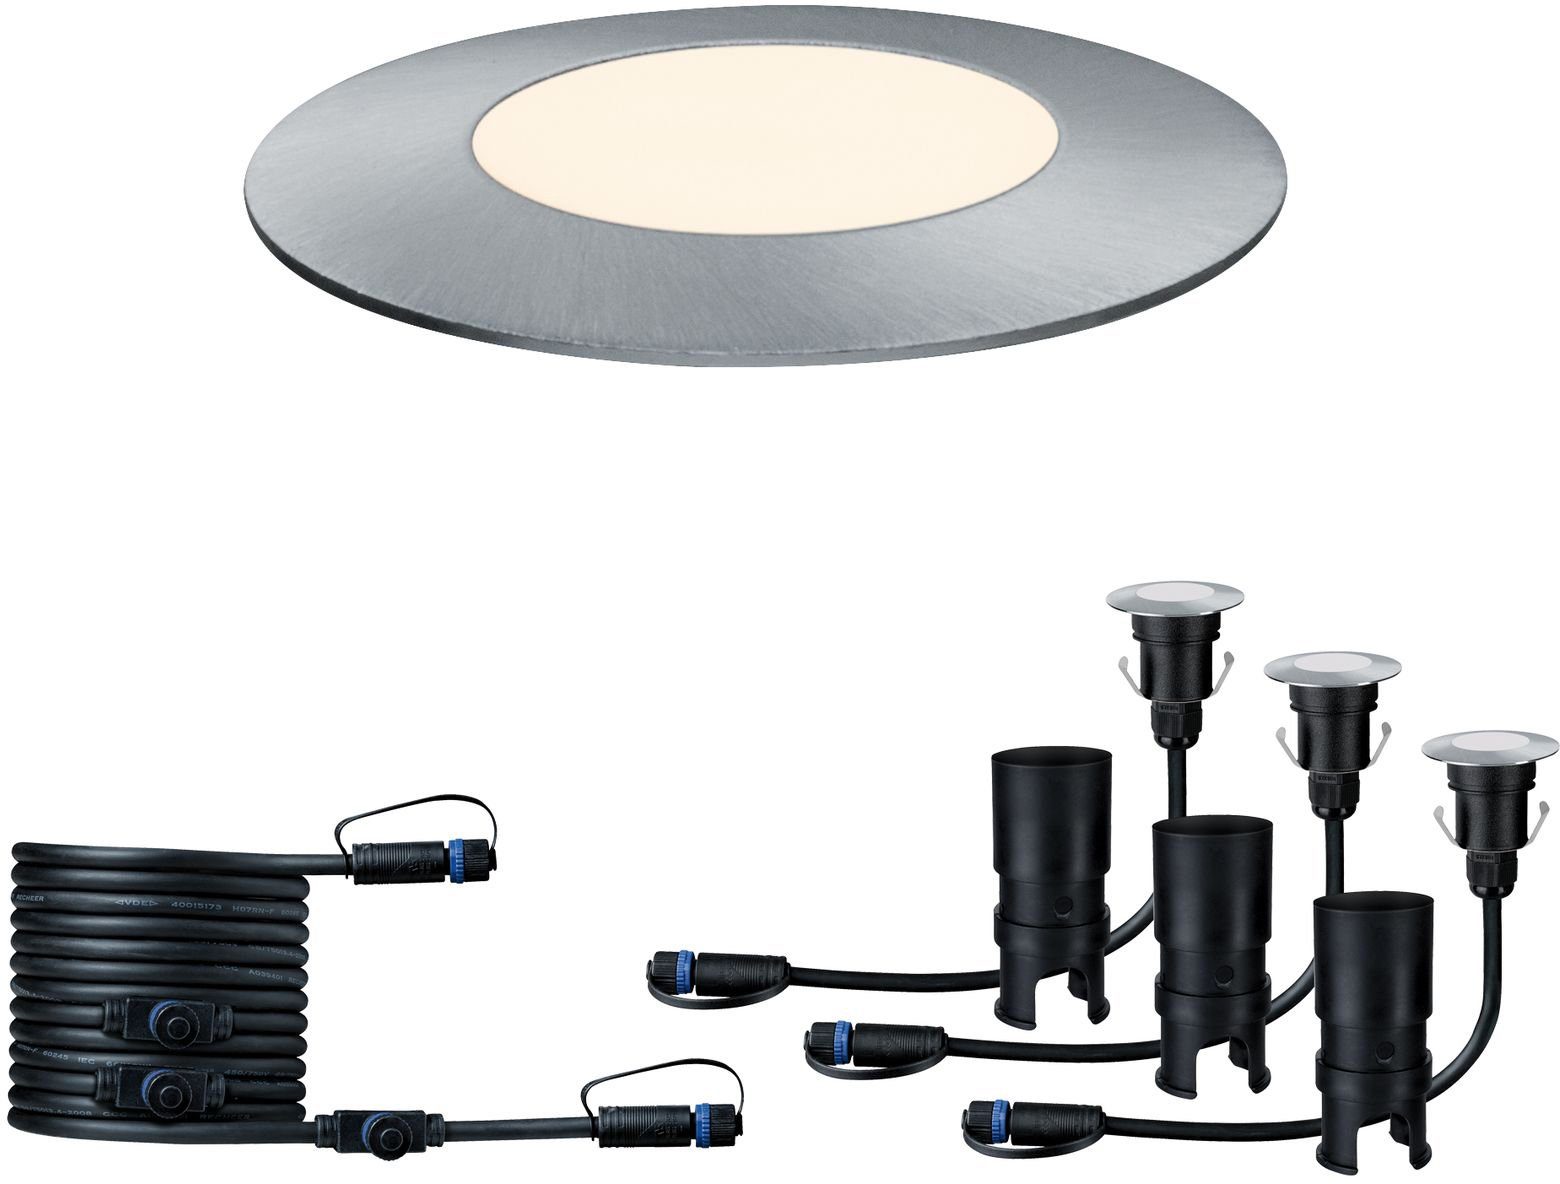 Plug & Shine, Wohnzimmerlampe Paulmann Deckenleuchte & LED Stoff, Plug Warmweiß, fest Textil, integriert, Shine, Einbauleuchte LED-Modul, LED Ø32cm,